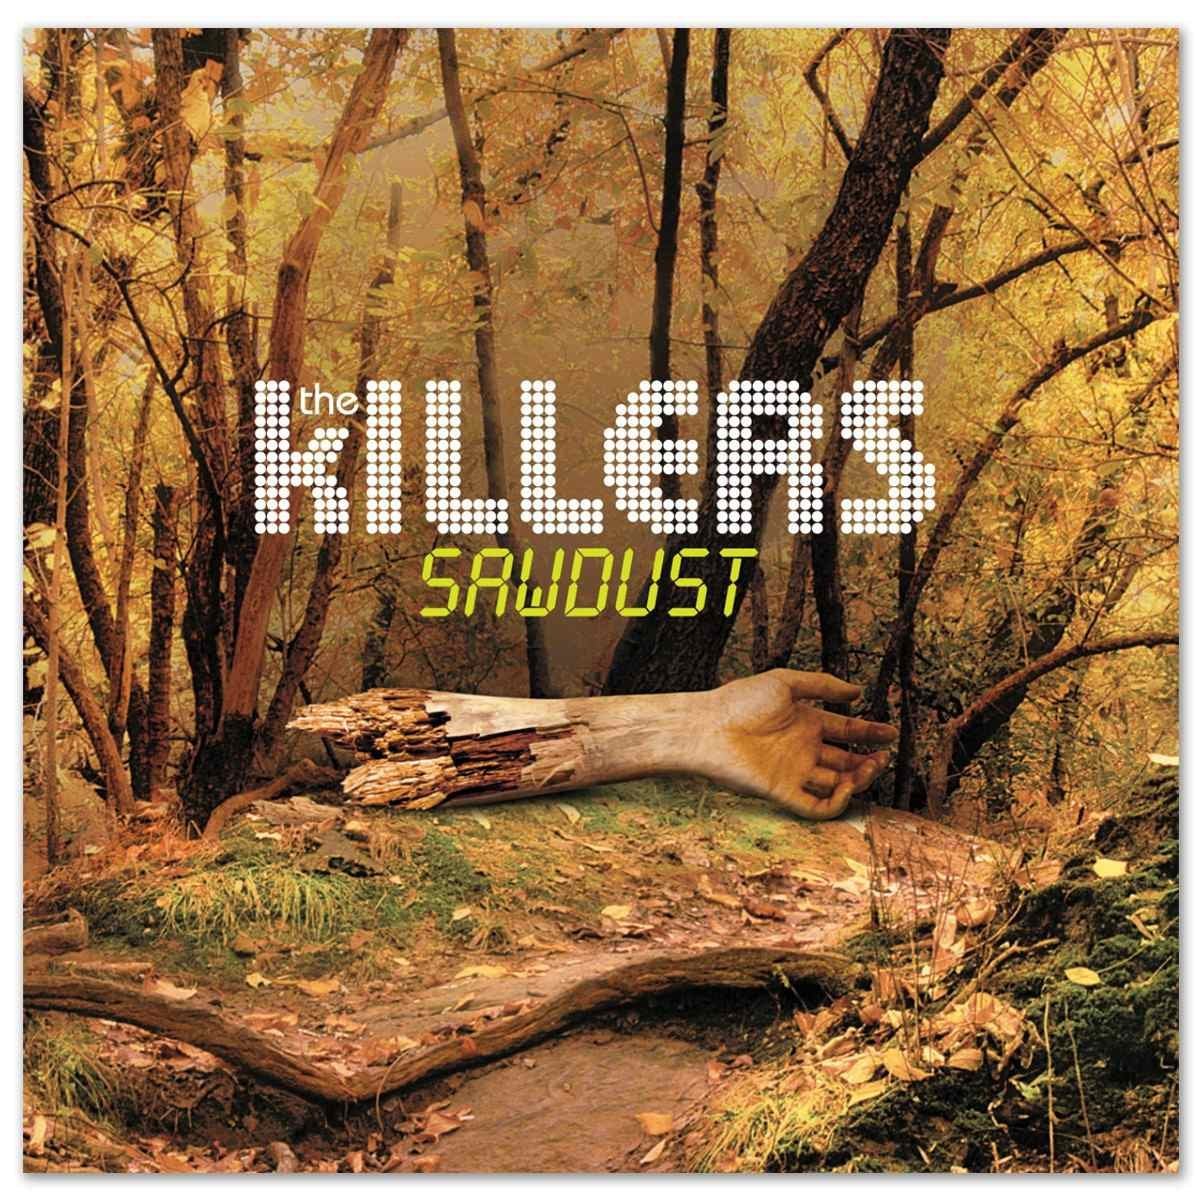 Lp The Killers Sawdust 180G